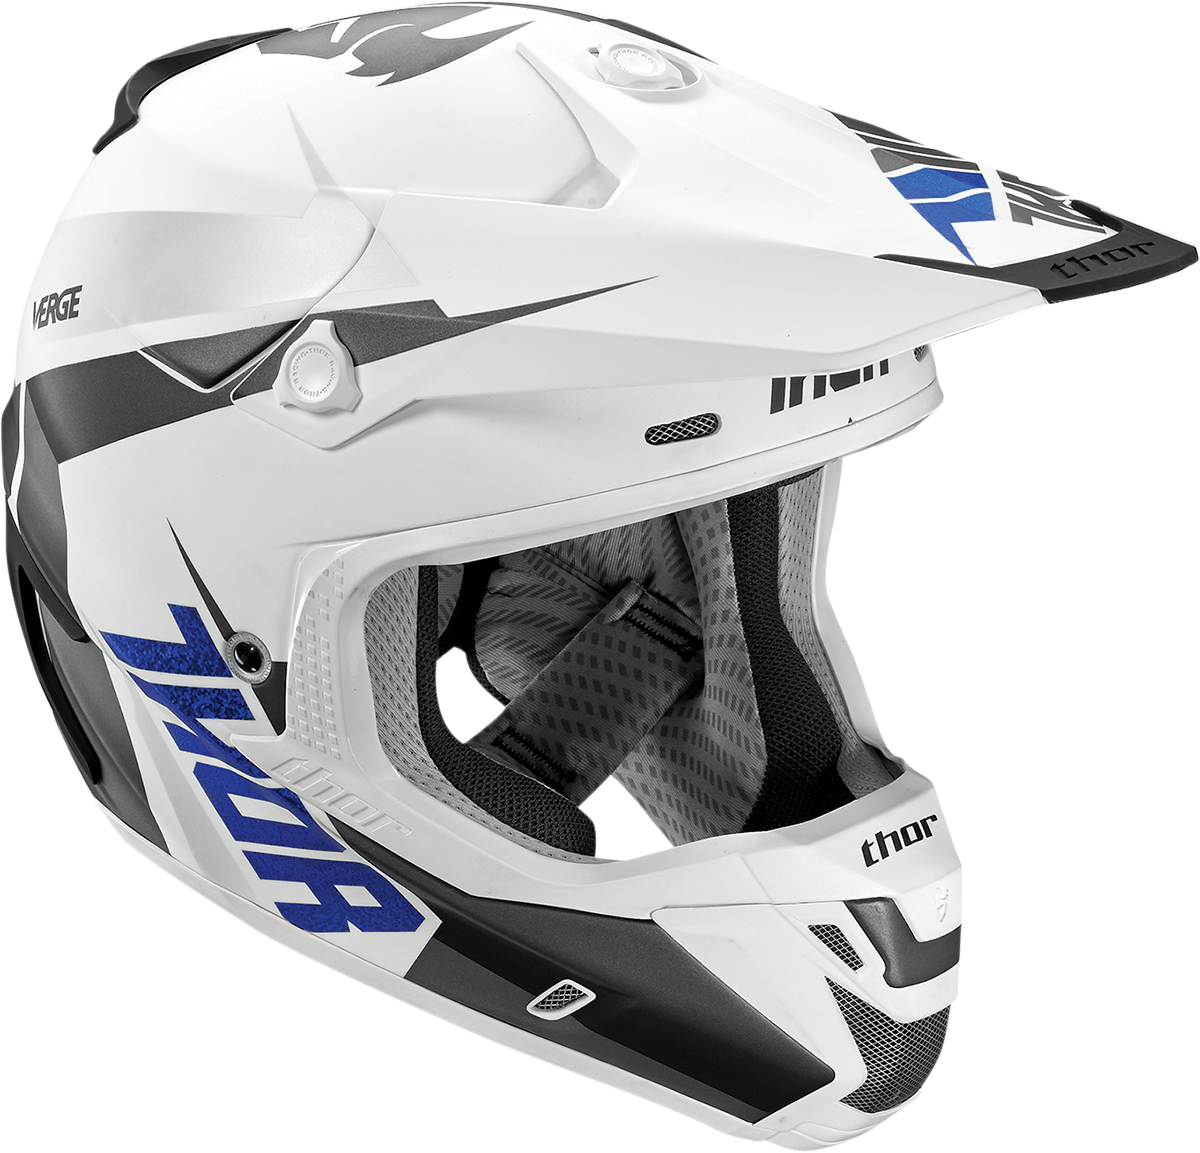 Helm motorcross PNG gambar Transparan